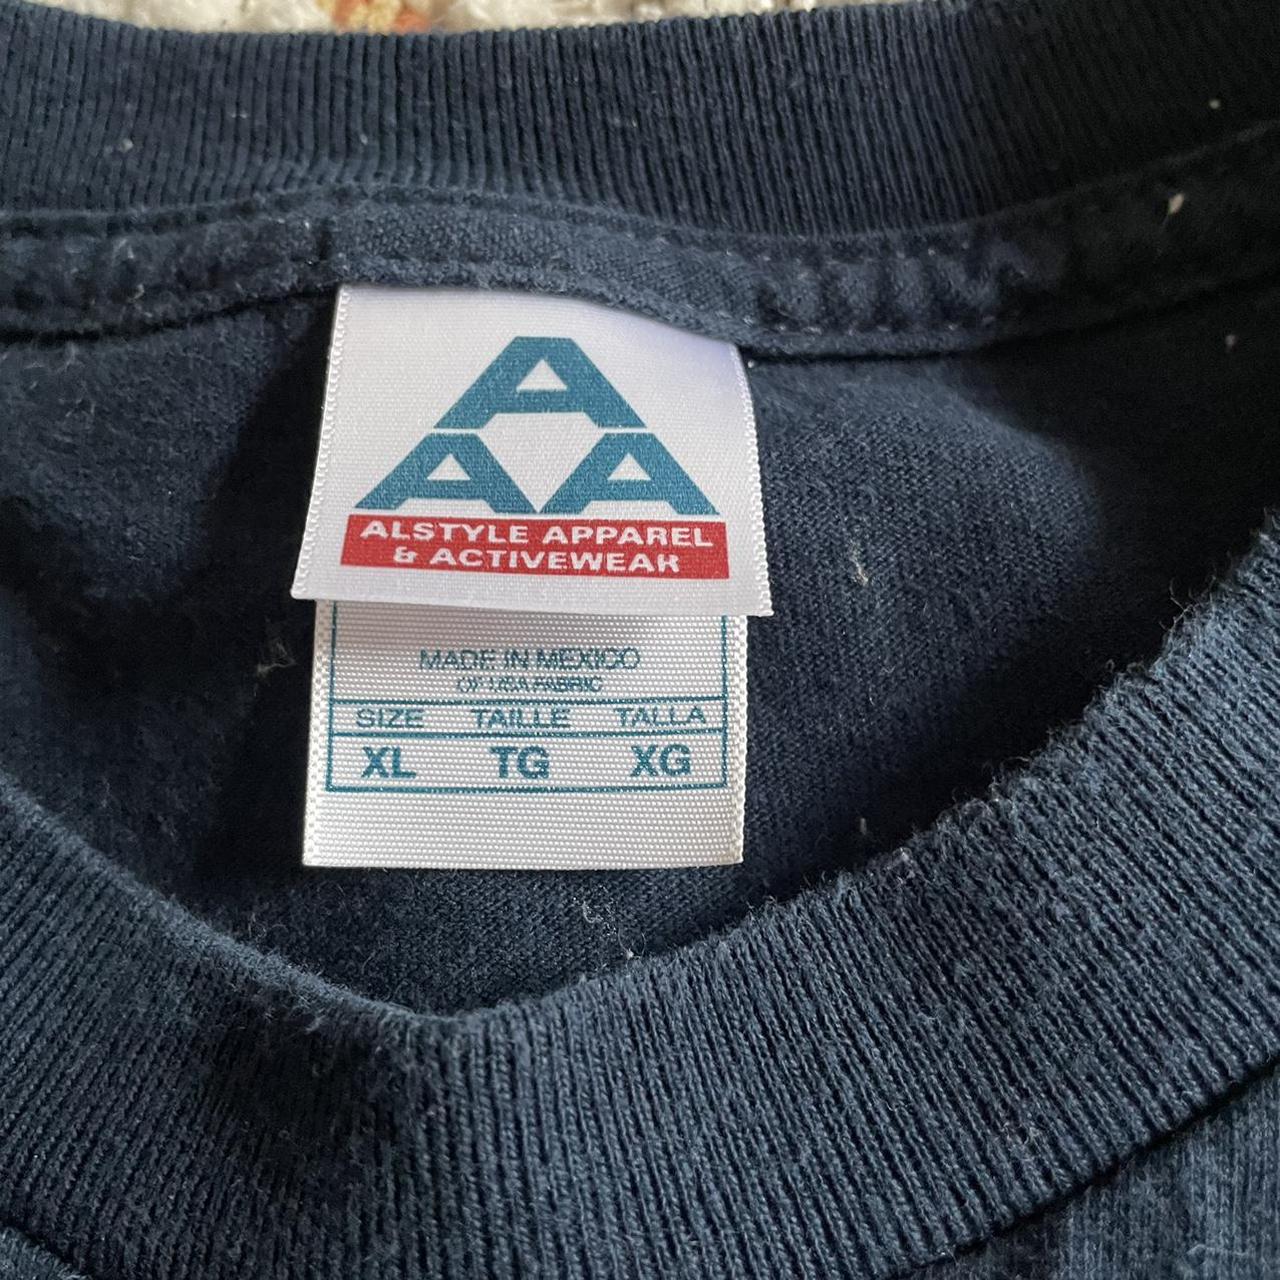 Product Image 4 - nashville embroidered t shirt

navy blue